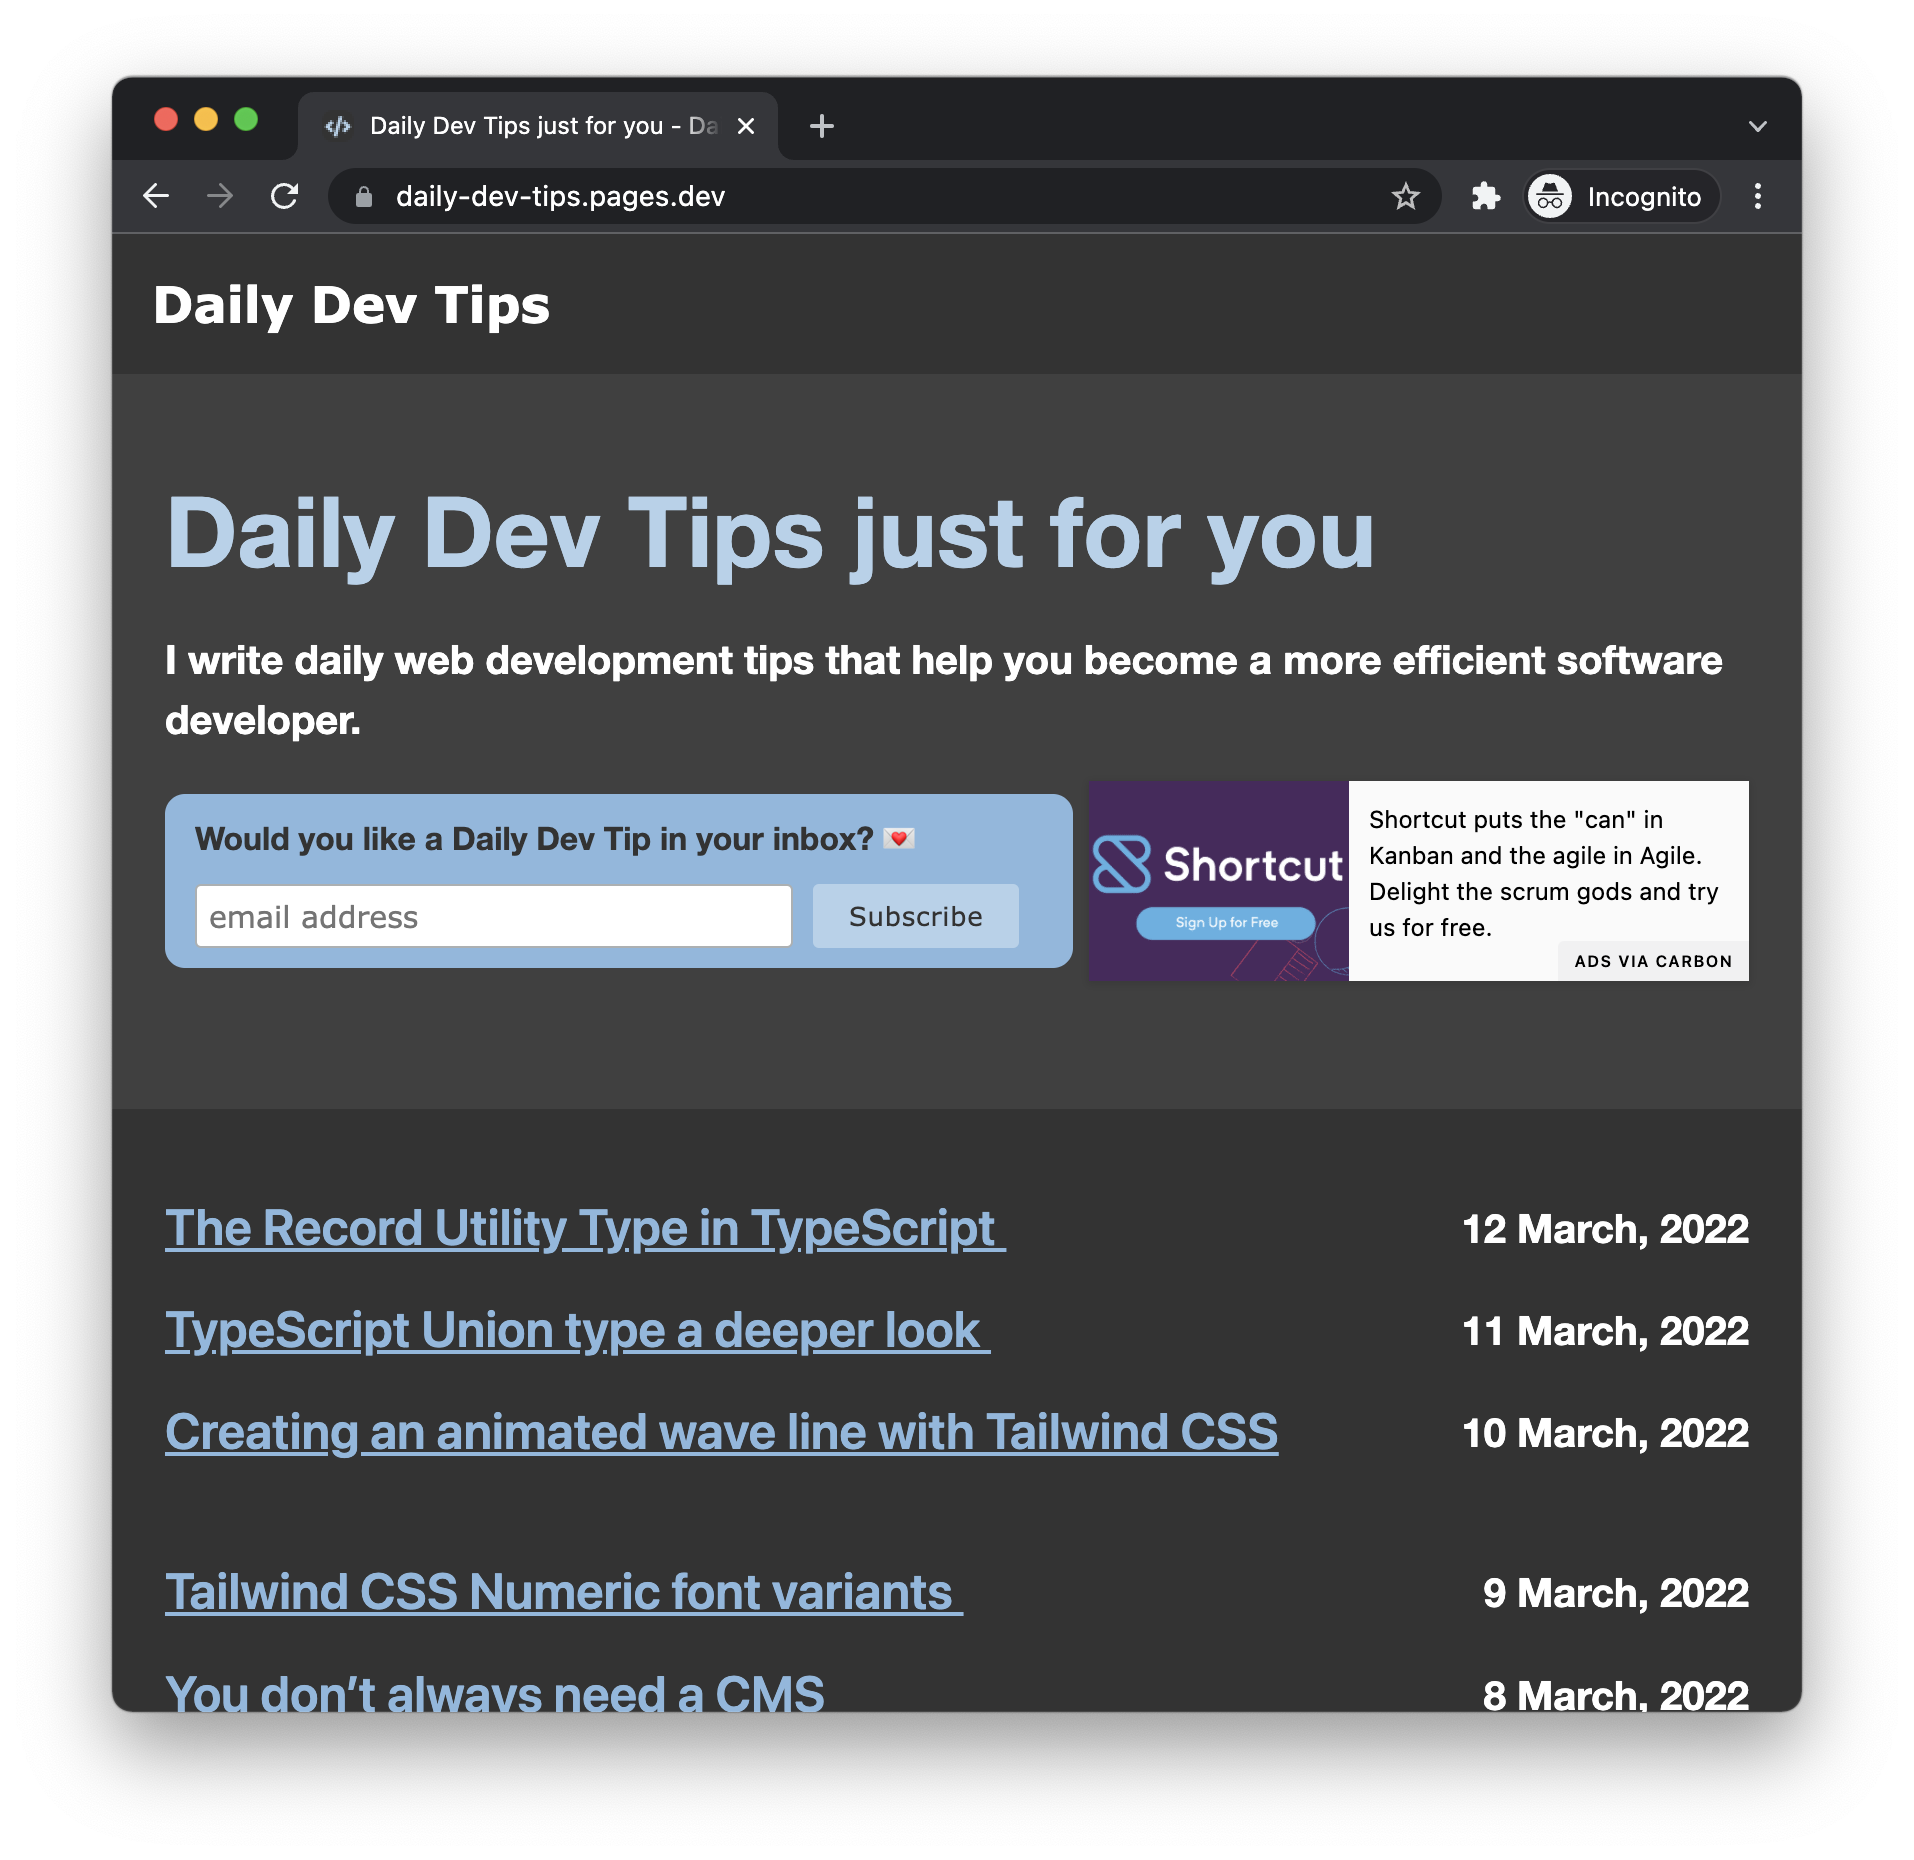 Version 1 of Daily Dev Tips